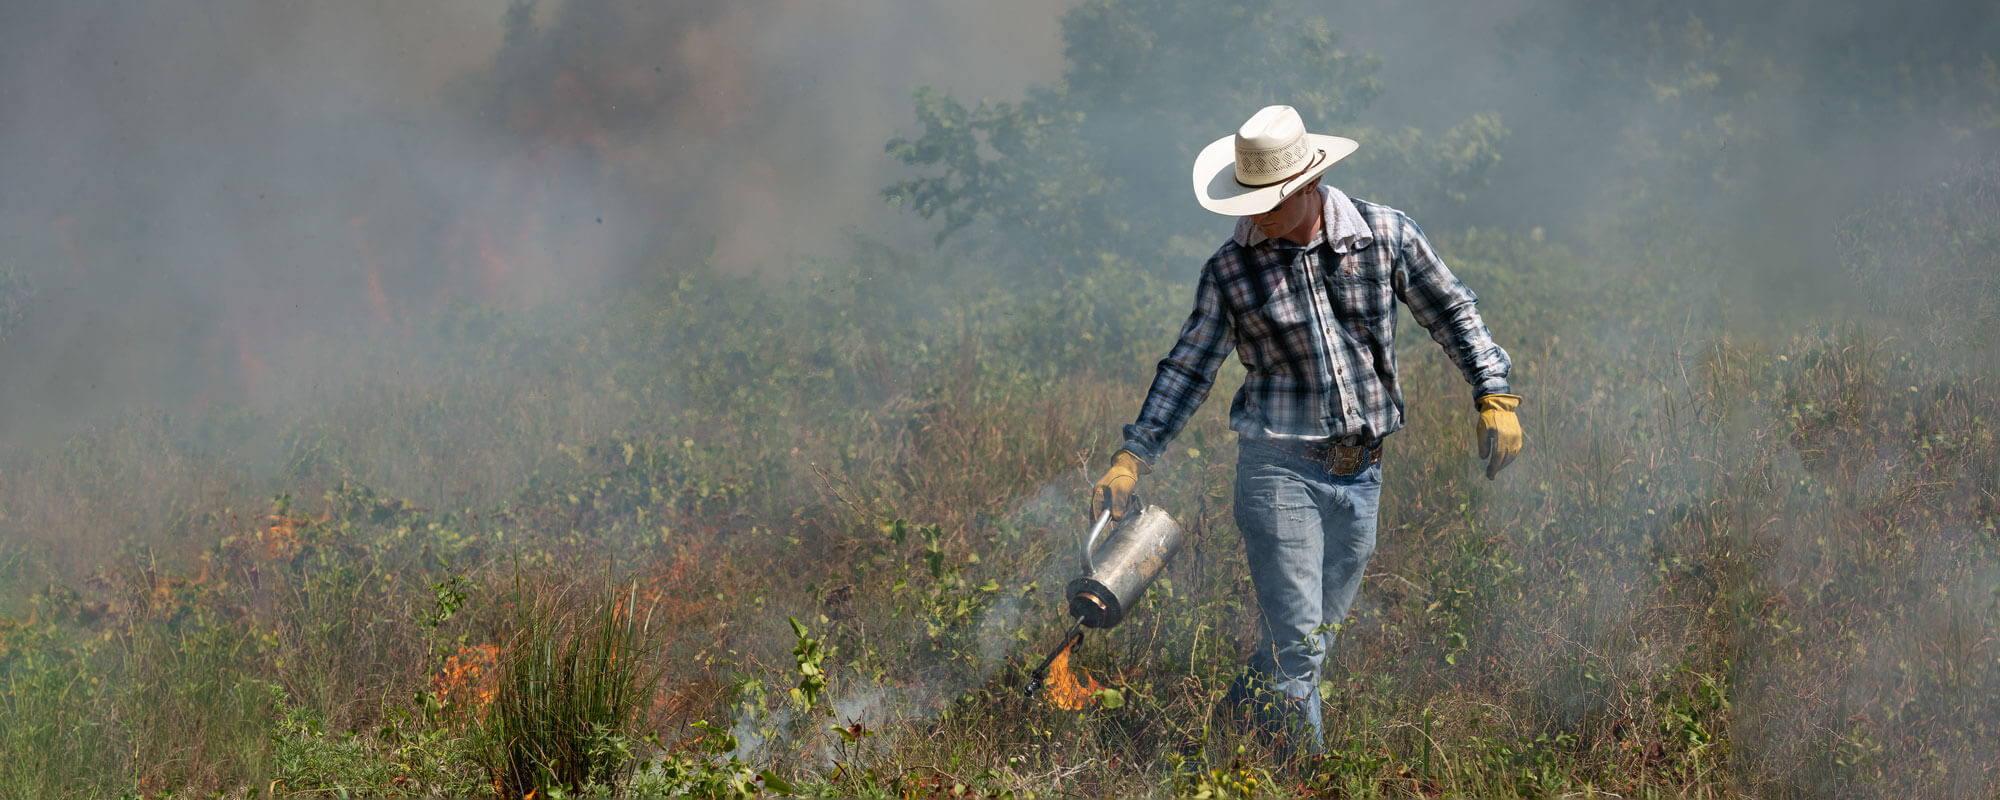 Rancher conducts prescribed burn